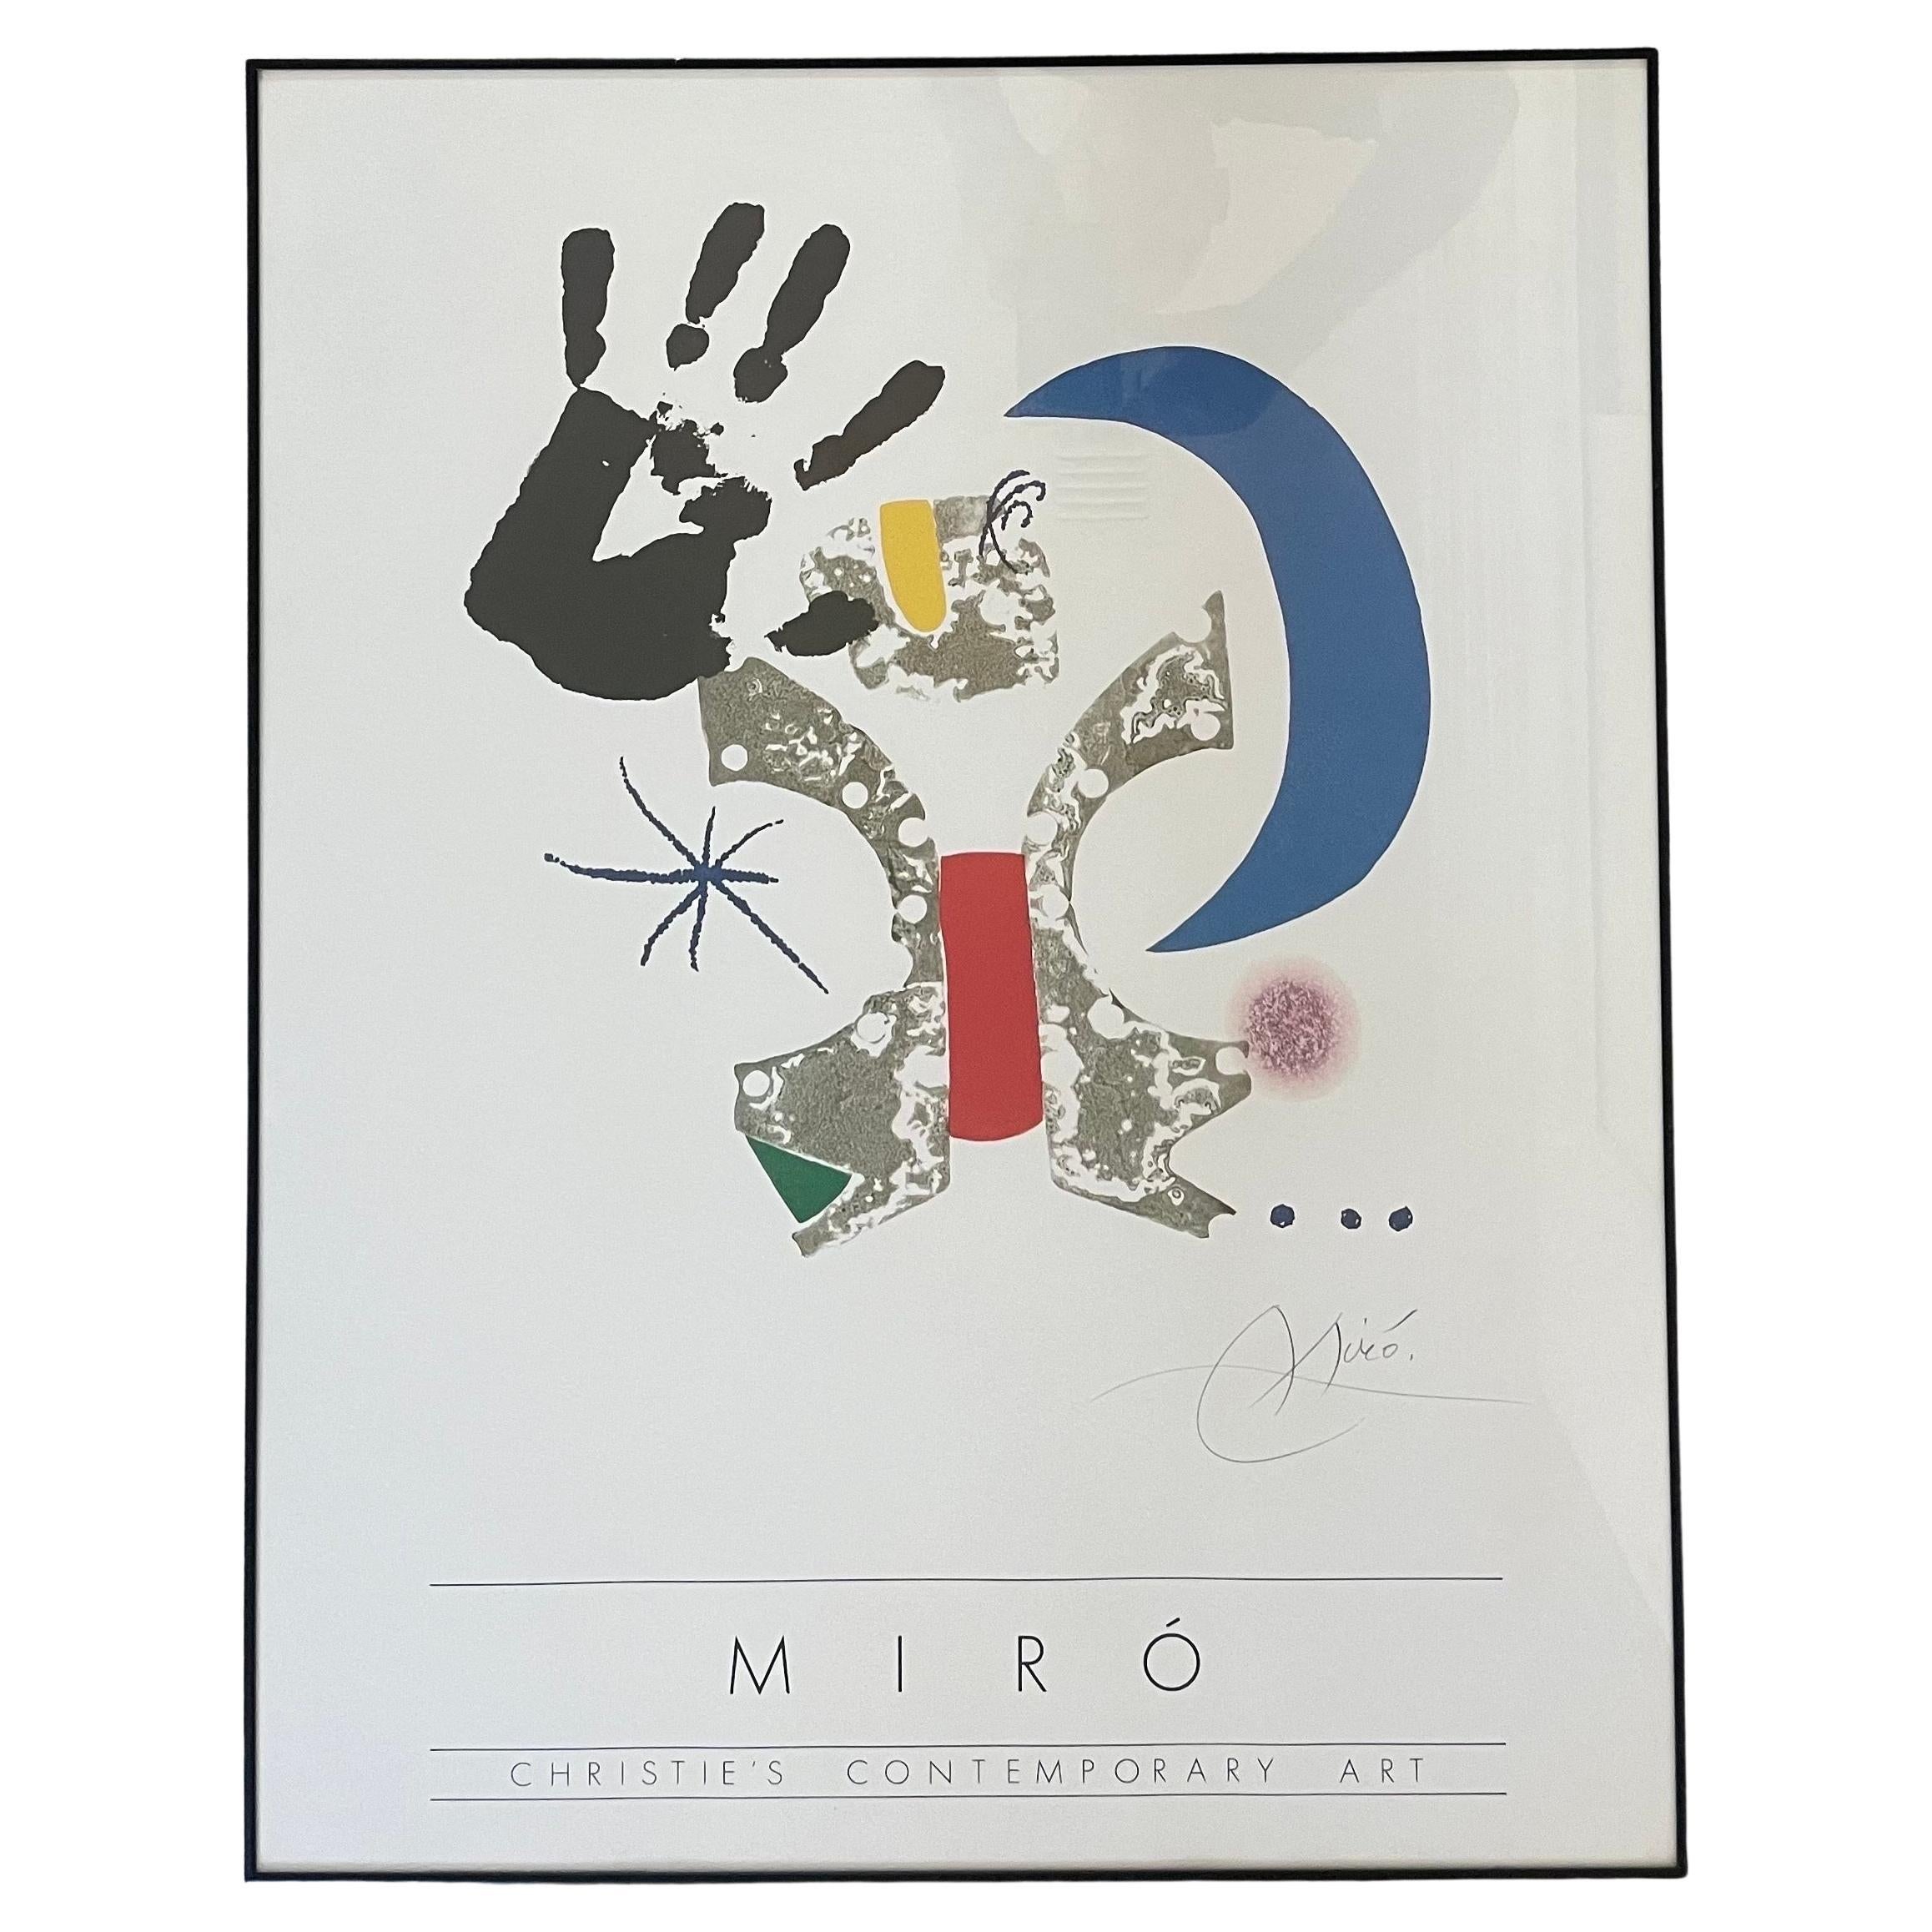 Joan Miro / Christies Contemporary Lithograph "Bonjour Max Ernst" Art Poster